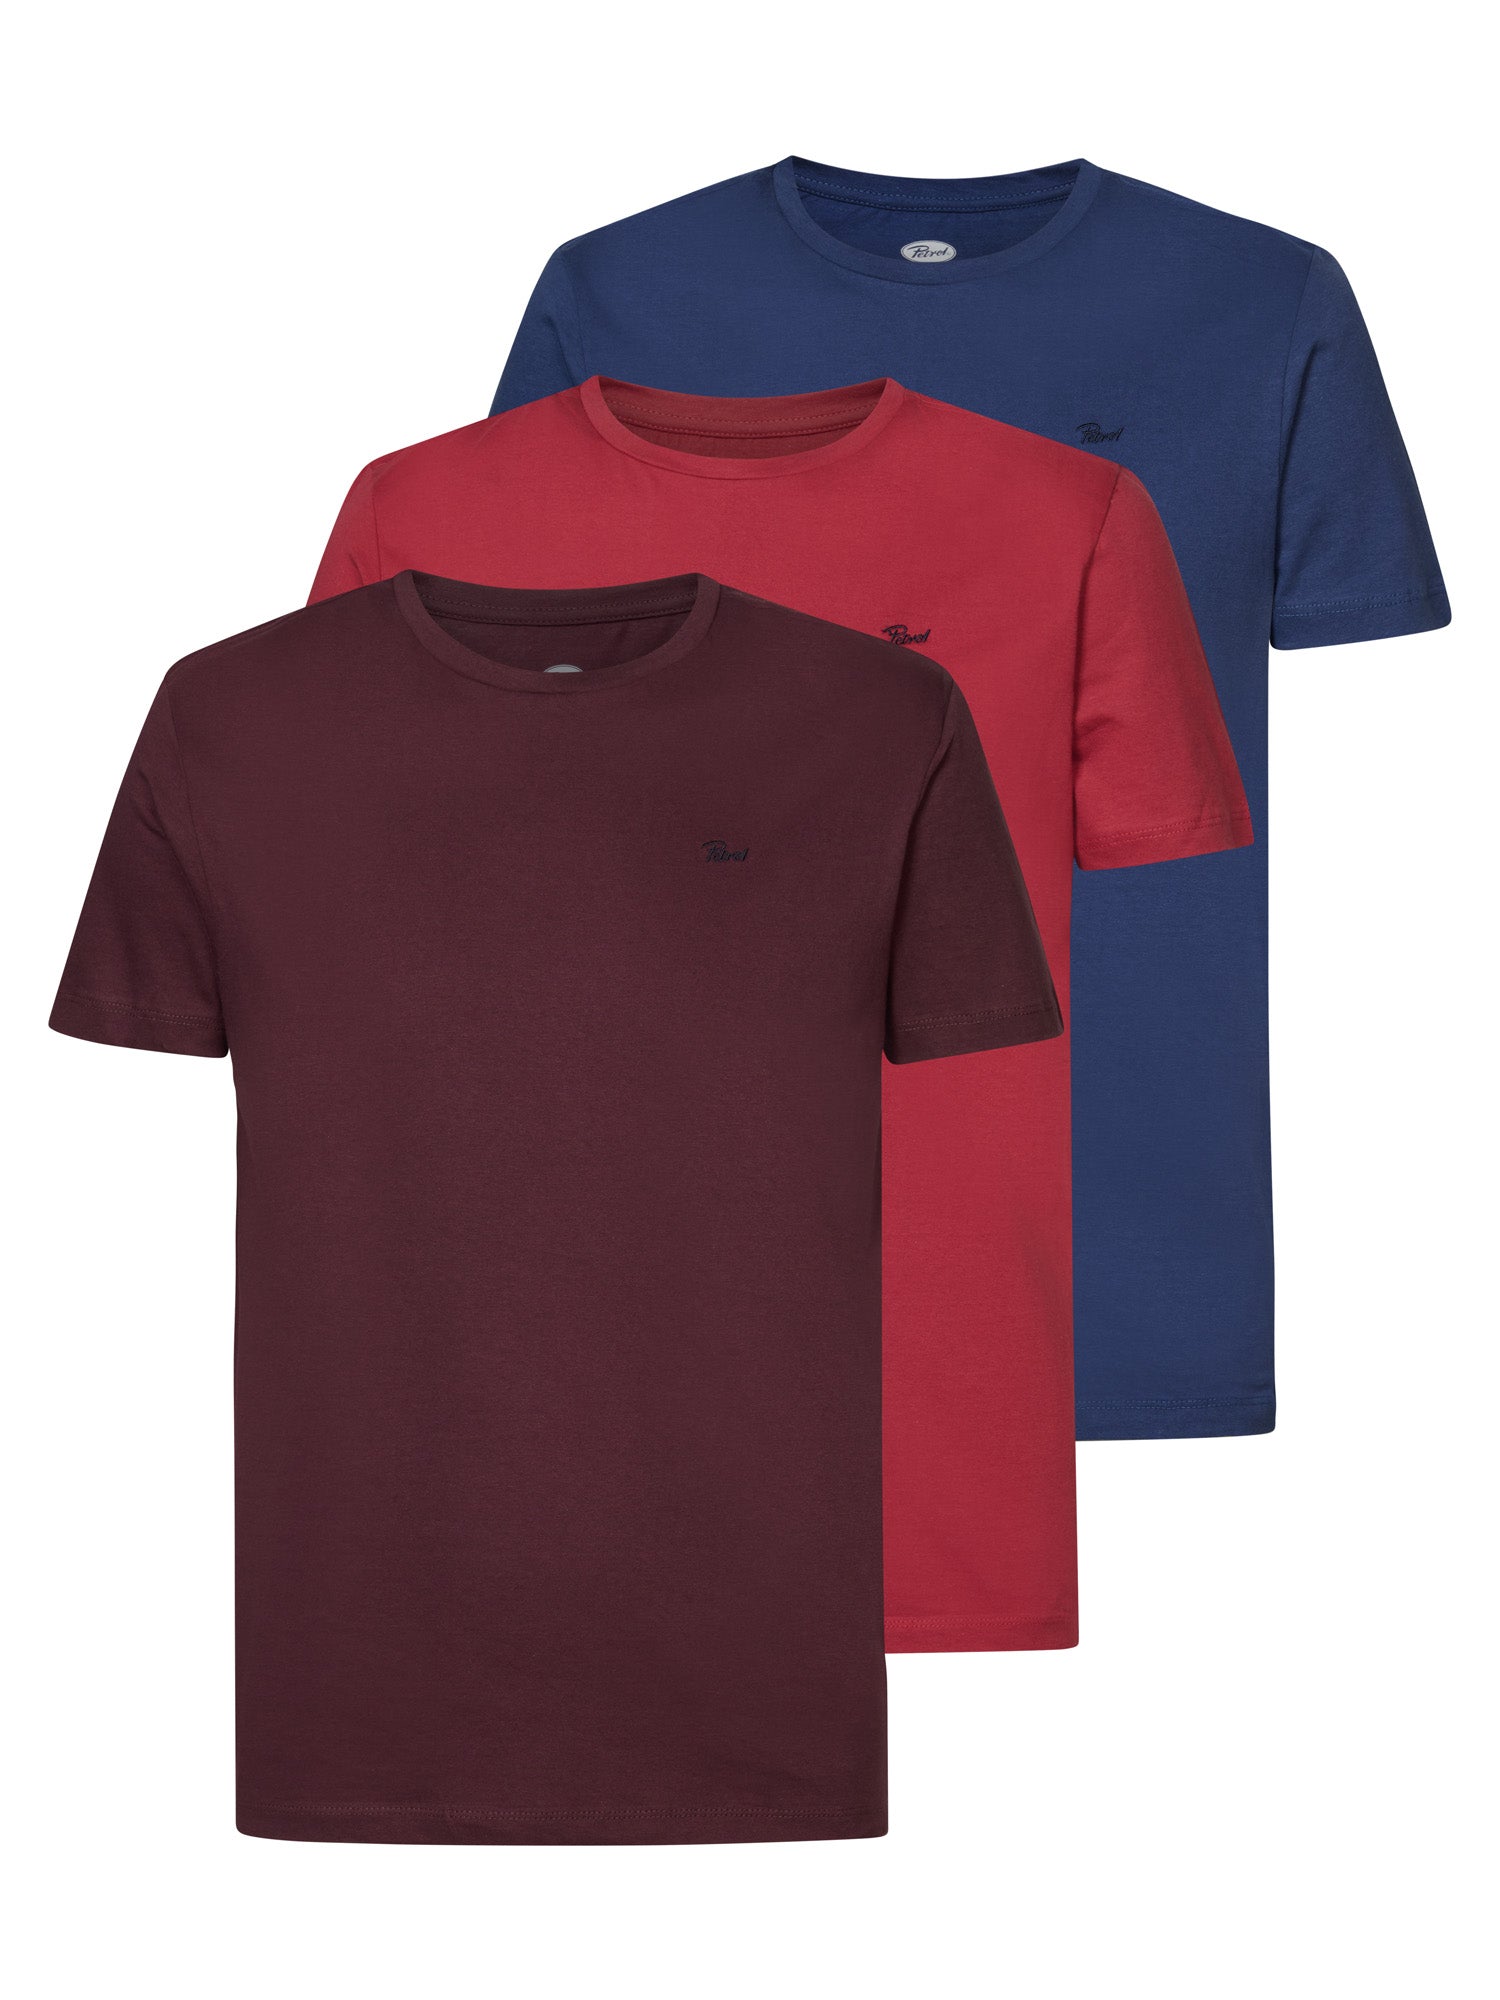 Petrol Industries 3 Pack T Shirt Burgundy/Red/Blue - XXL